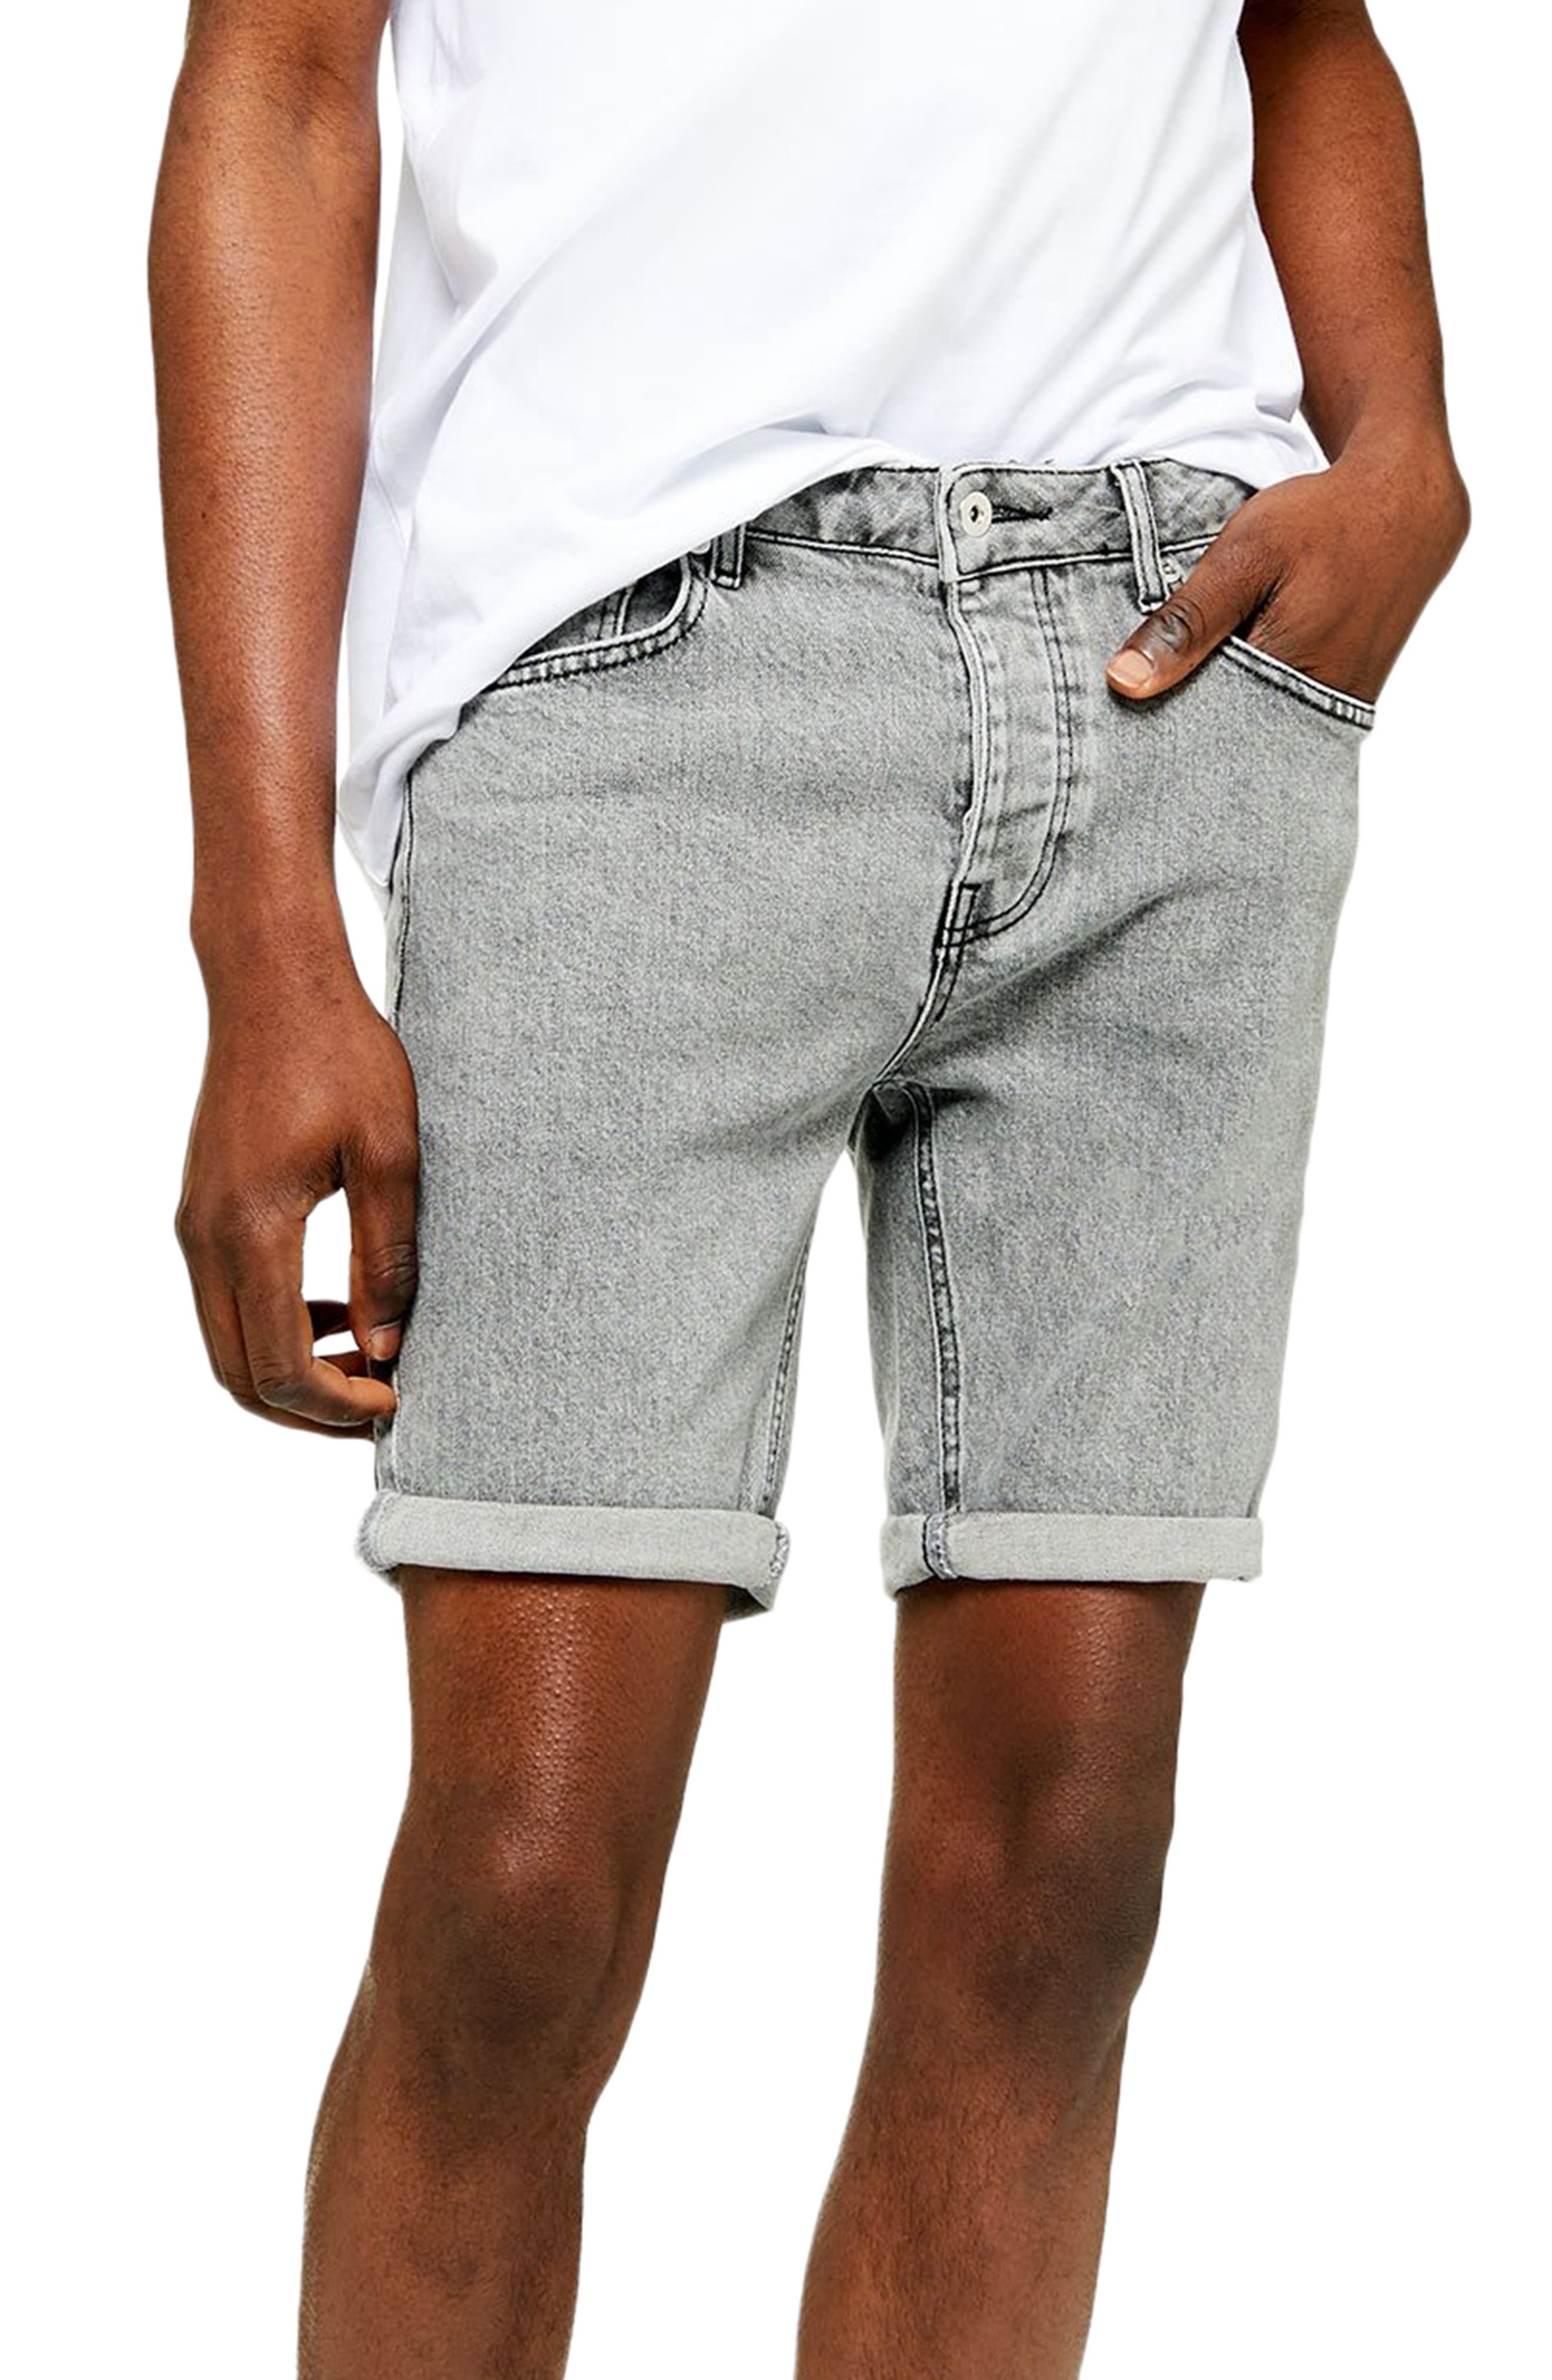 topman jean shorts